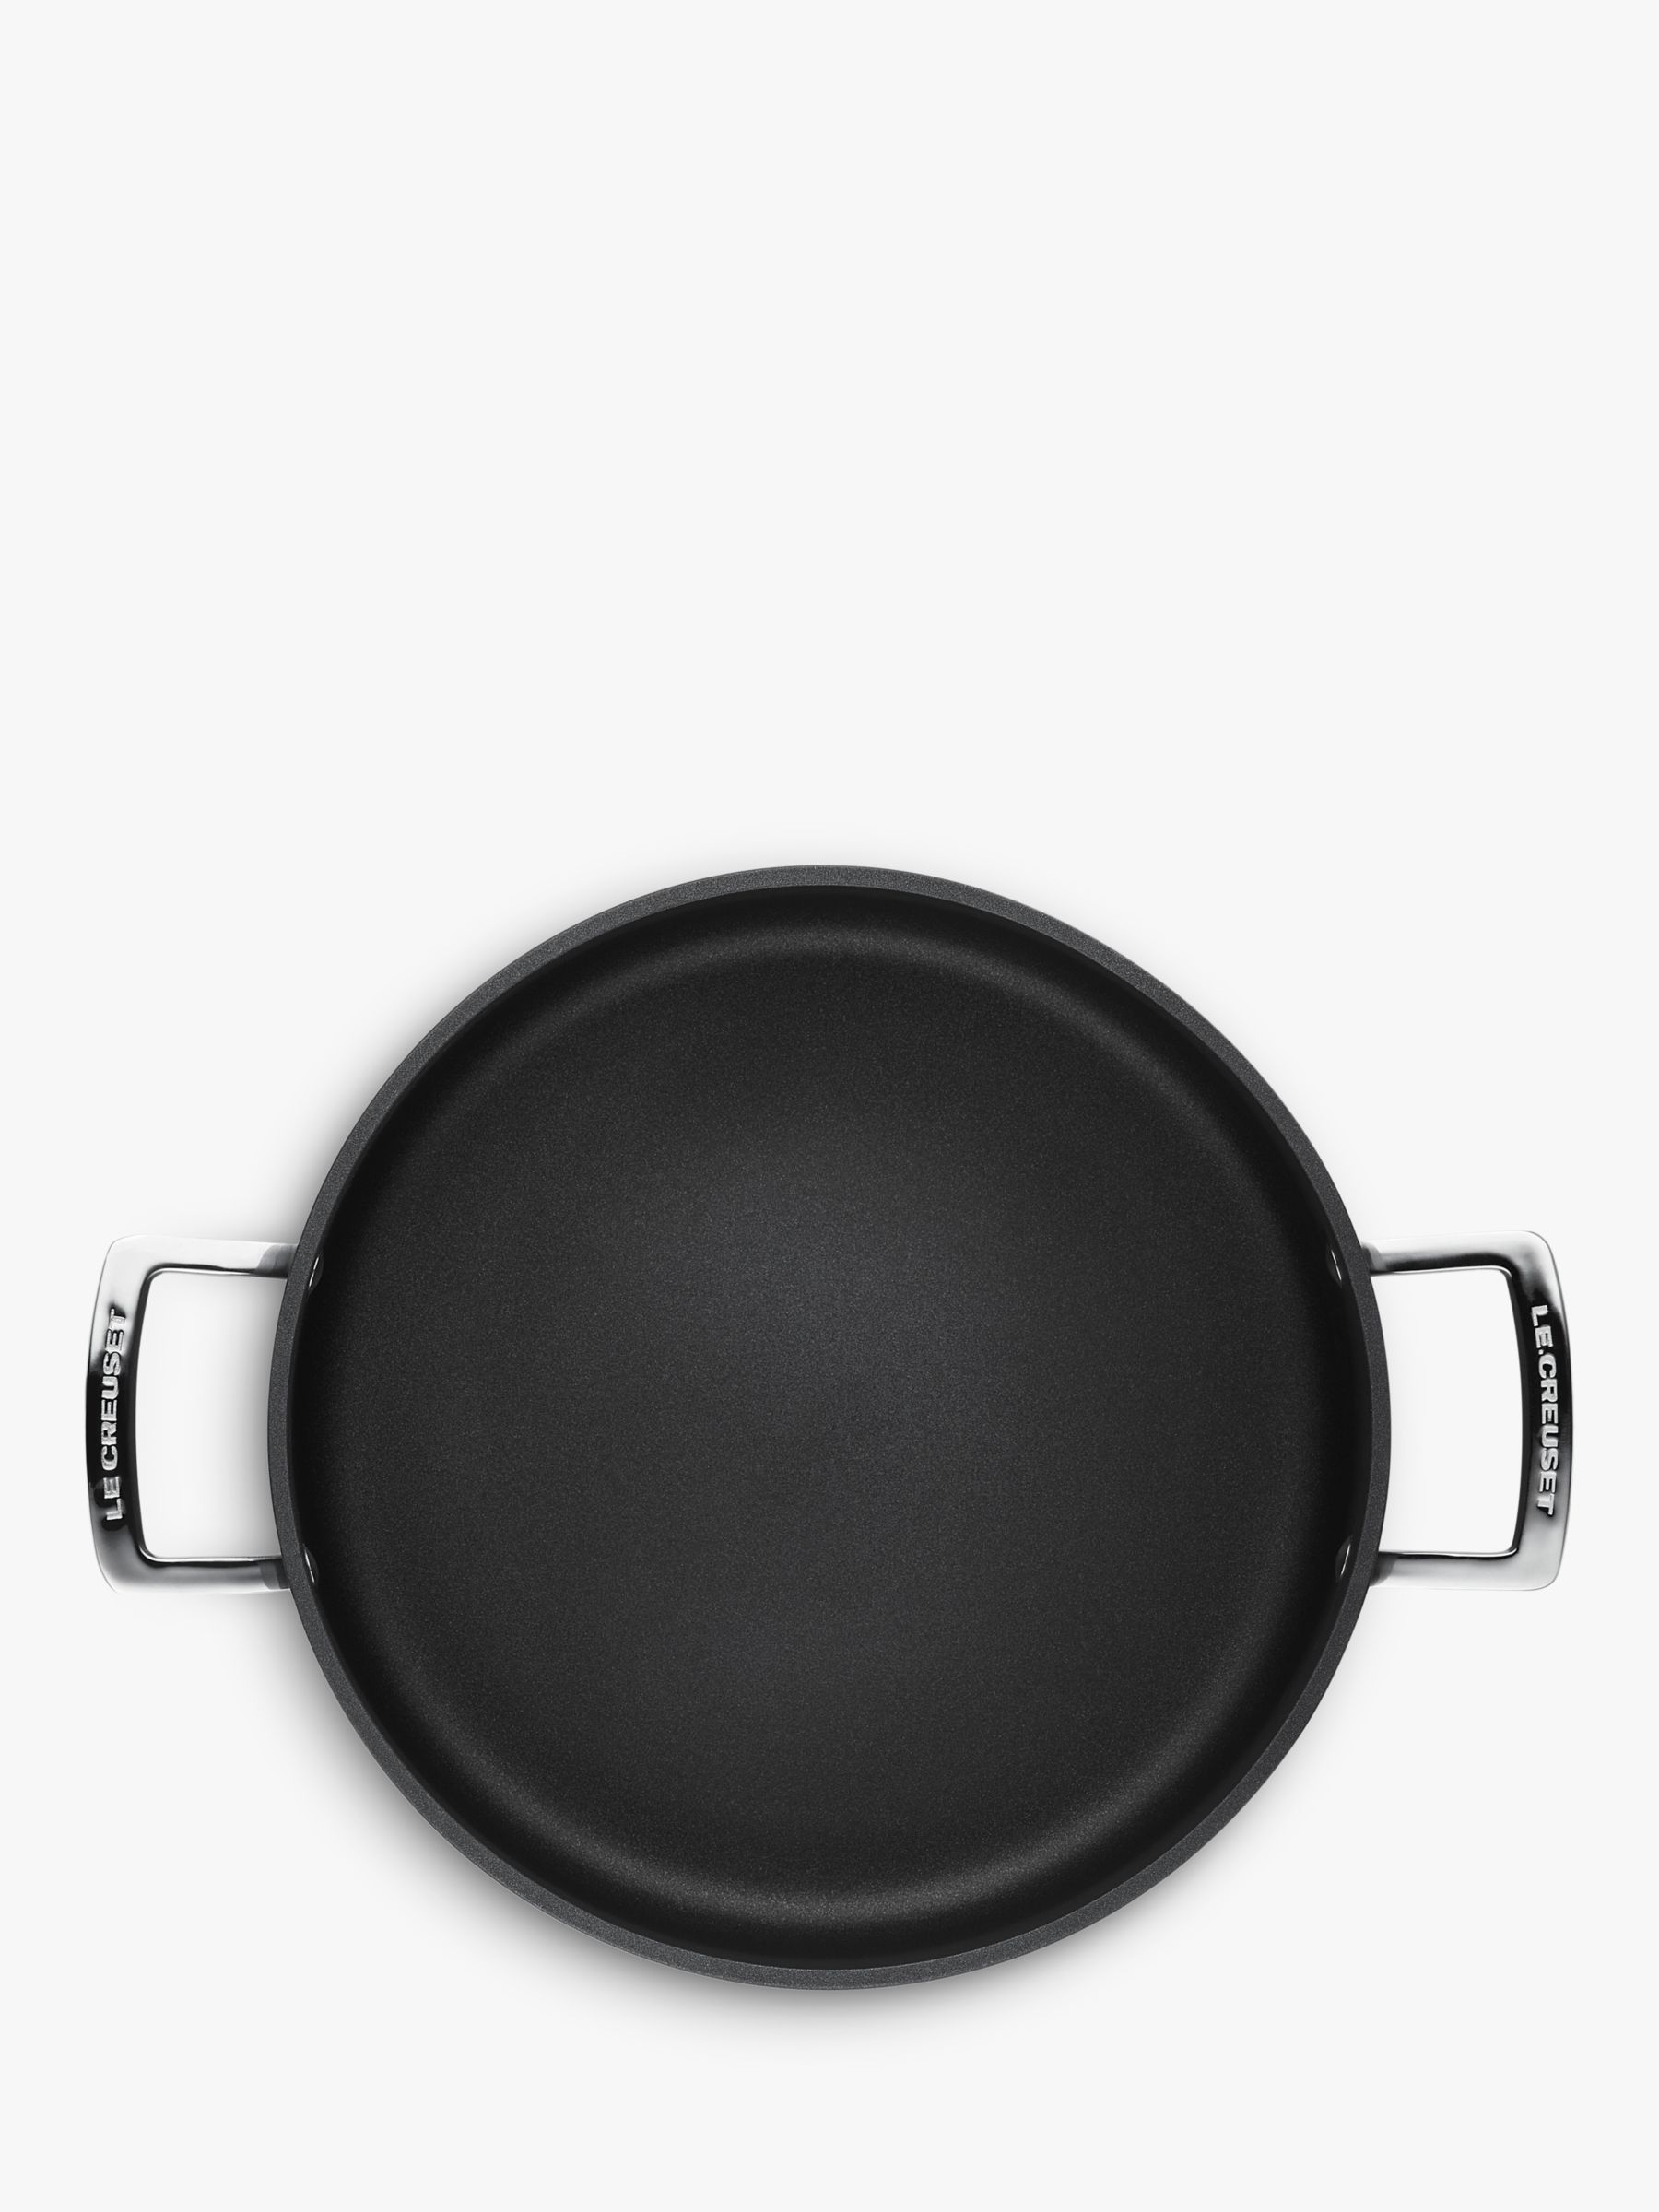 LE CREUSET - Toughened Non-Stick aluminium sauté pan with glass